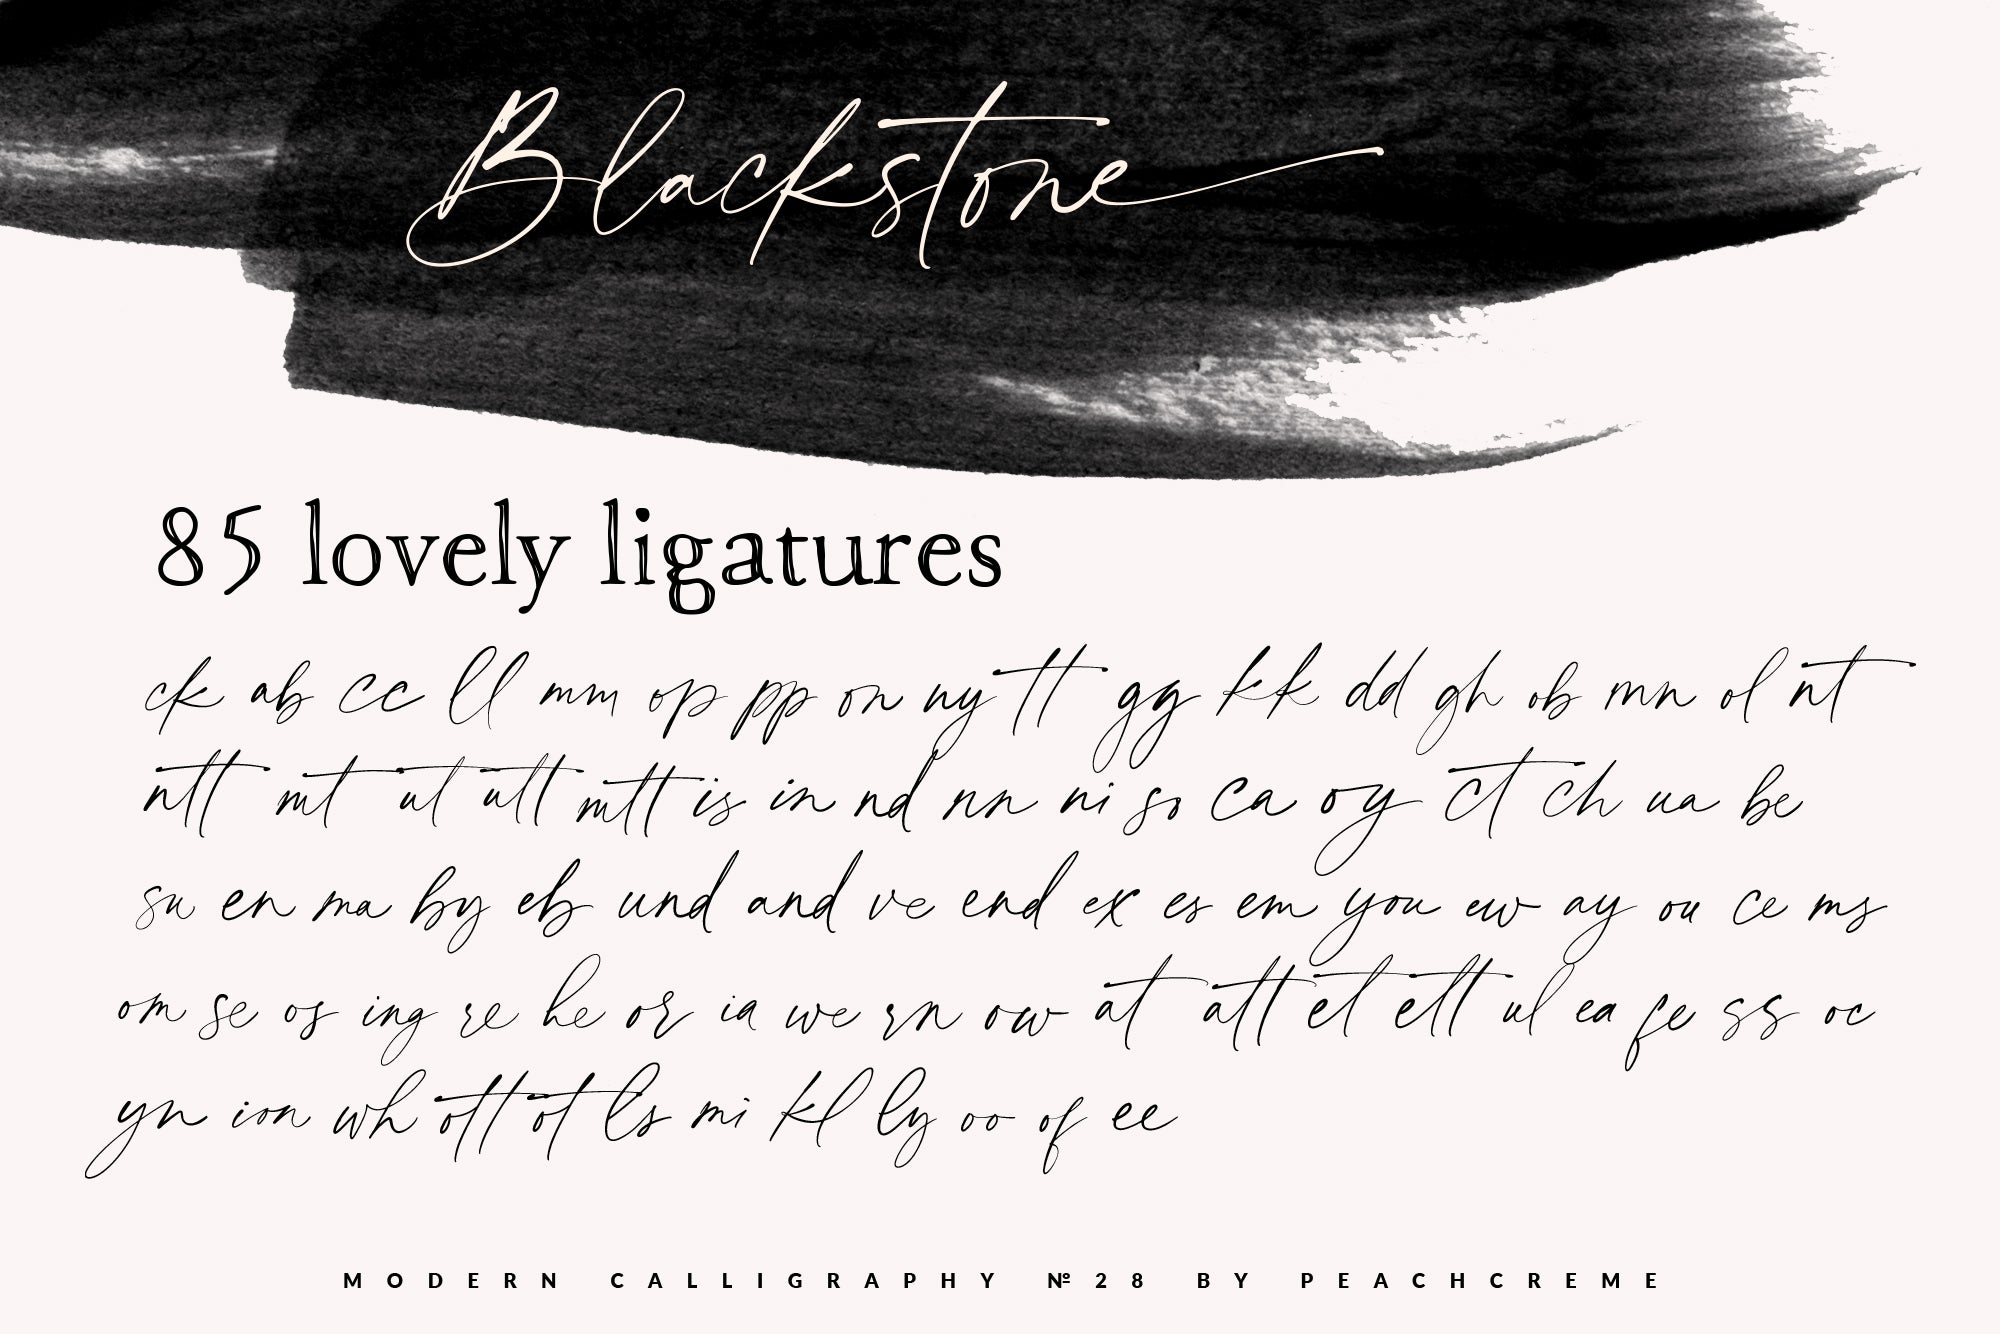 Blackstone Modern Calligraphy